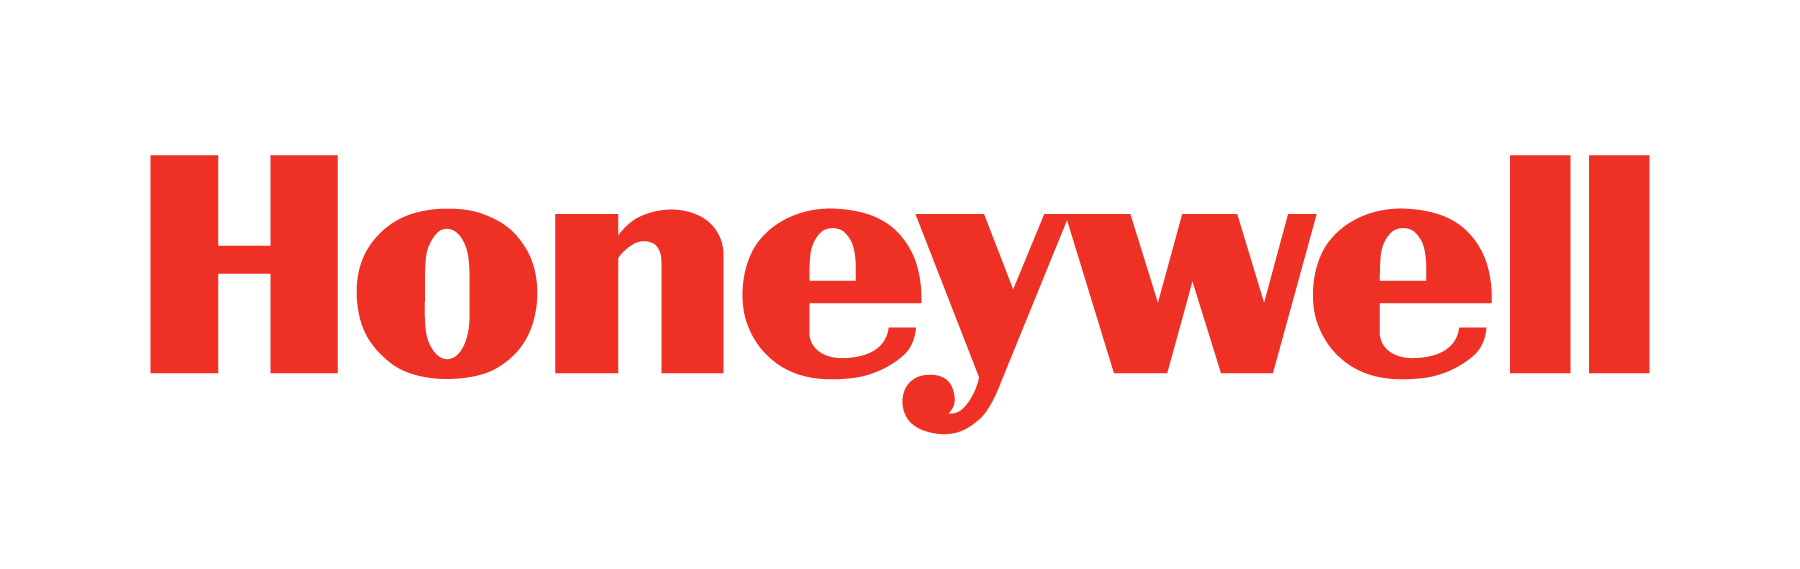 Honeywell_Logo 10.4.png